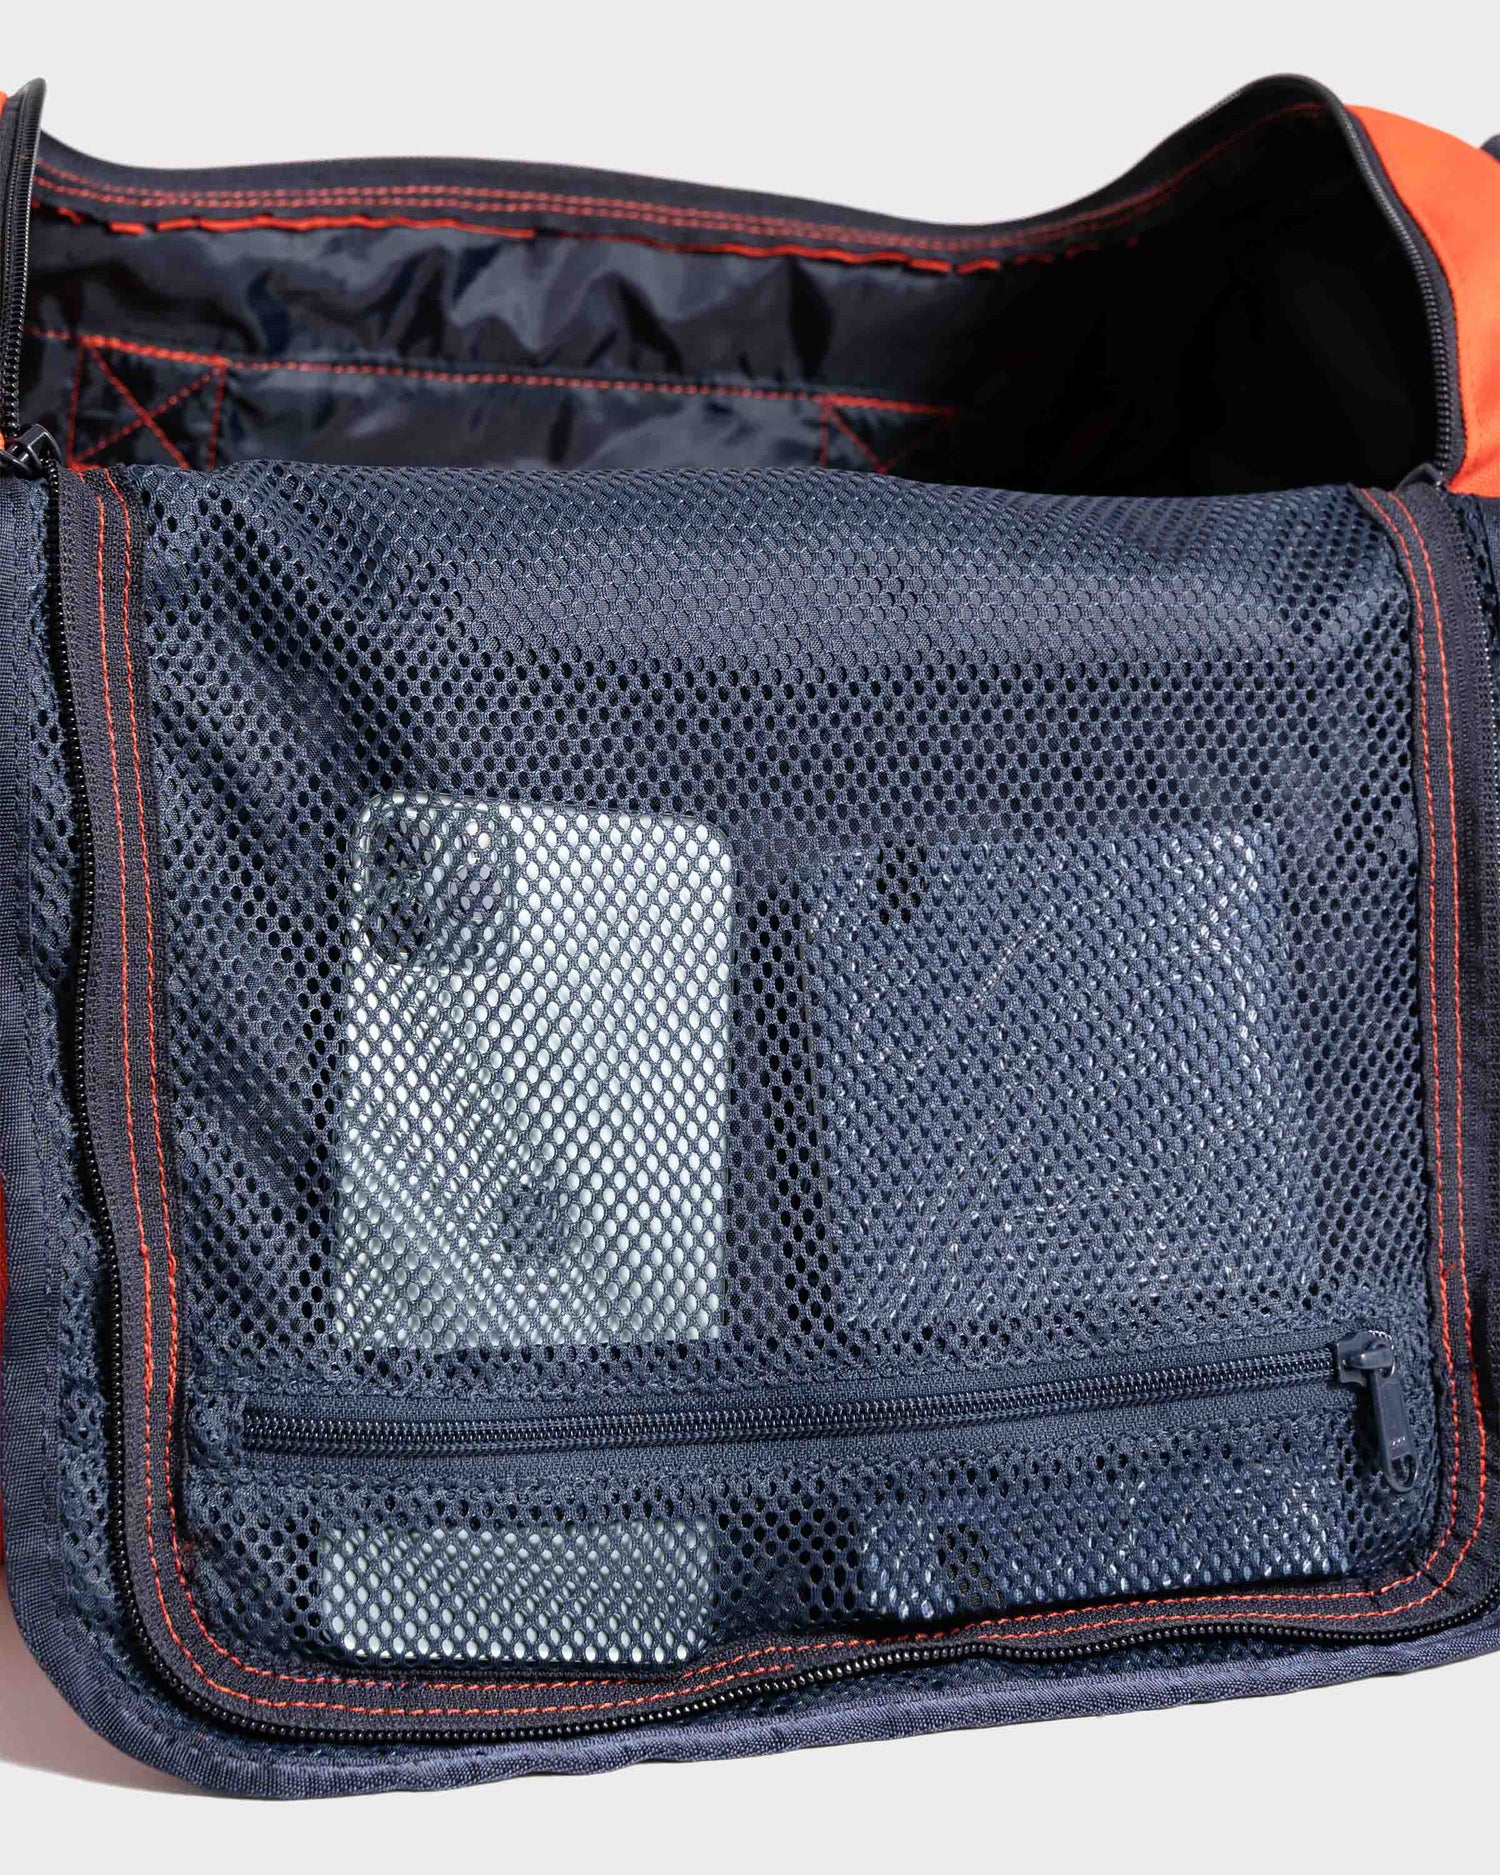 Inside top pocket of orange mini duffle bag by United by Blue